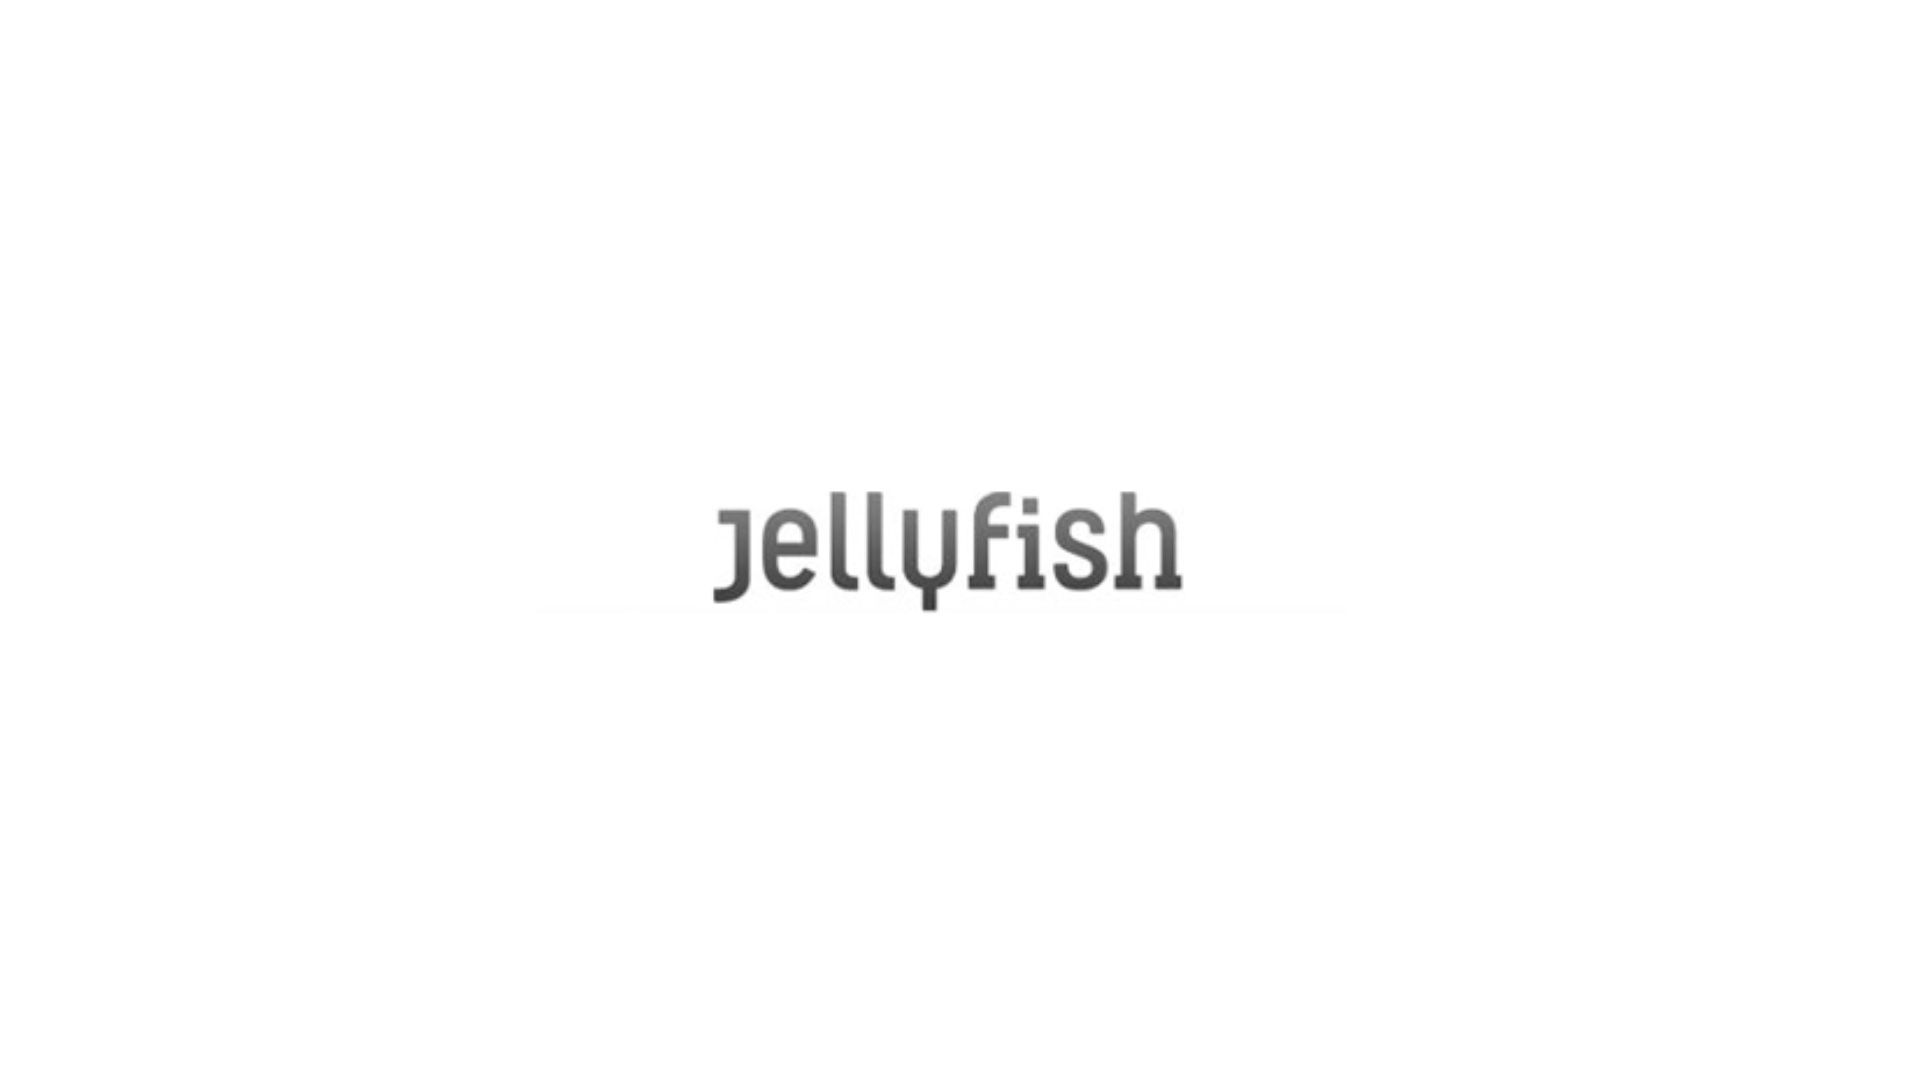 Jellyfish acquires 5 companies